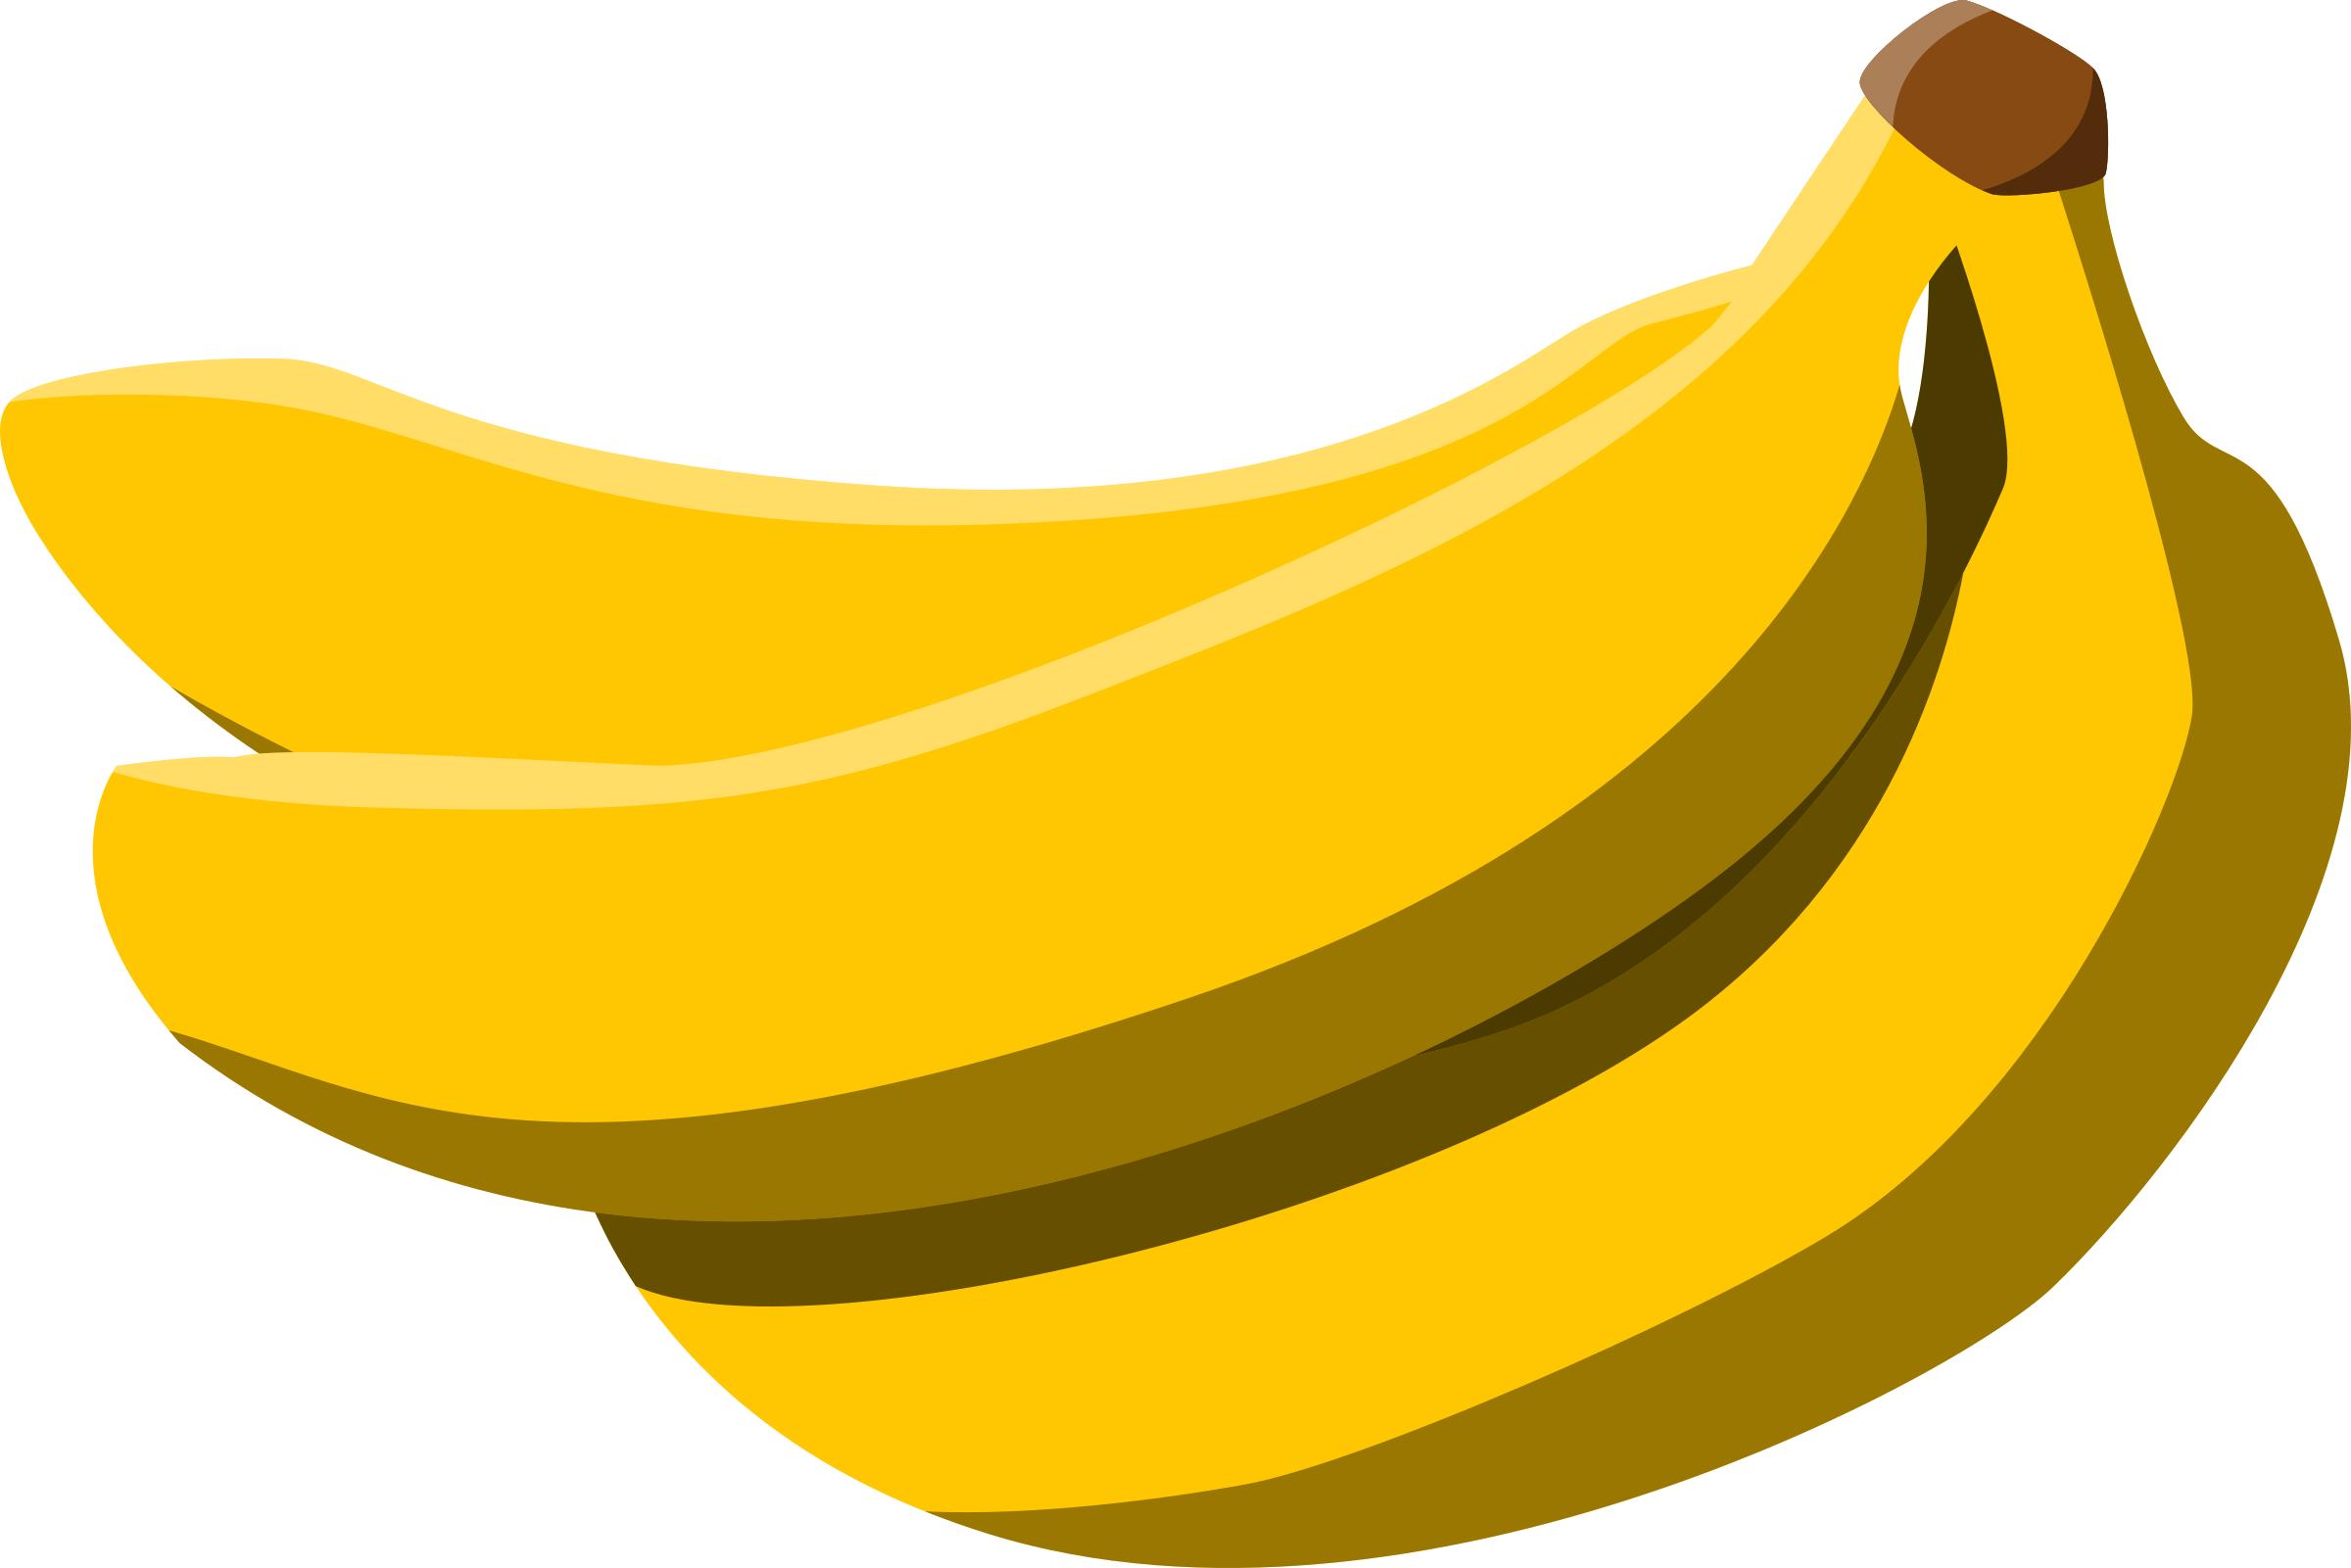 banana fruit image